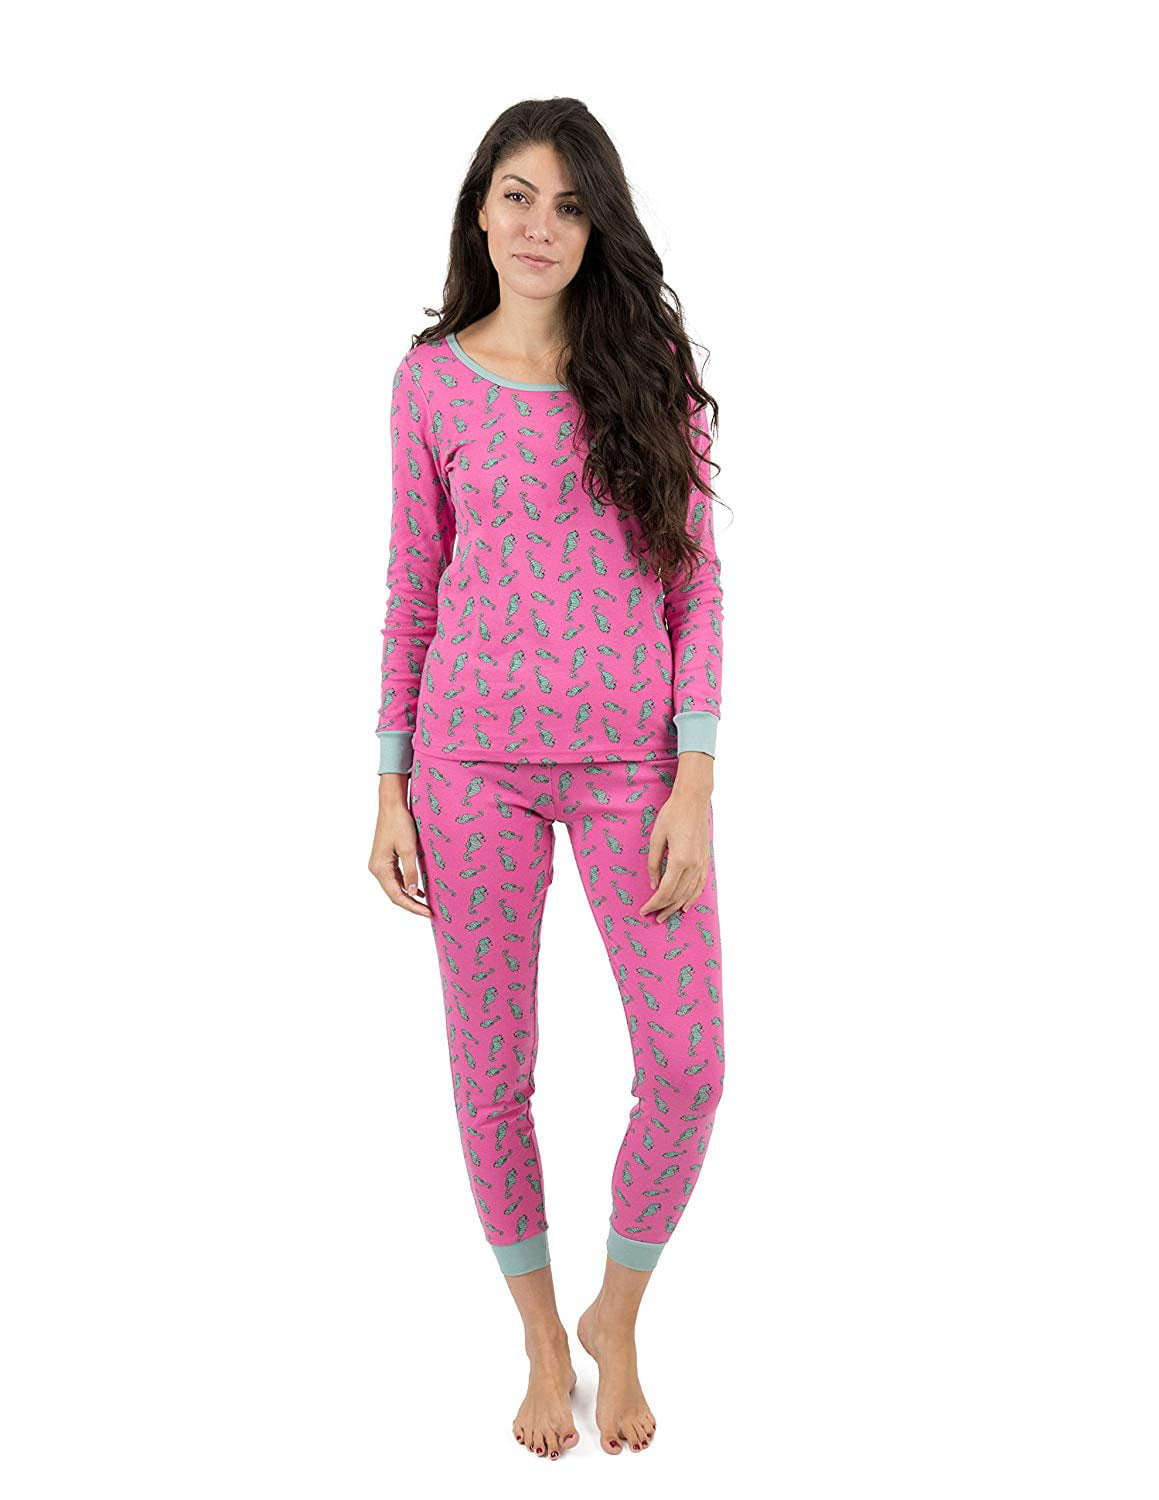 Girls Unicorn//Butterfly//Cat Pajamas Cotton Set PJS 2 Pieces Sleepwear.